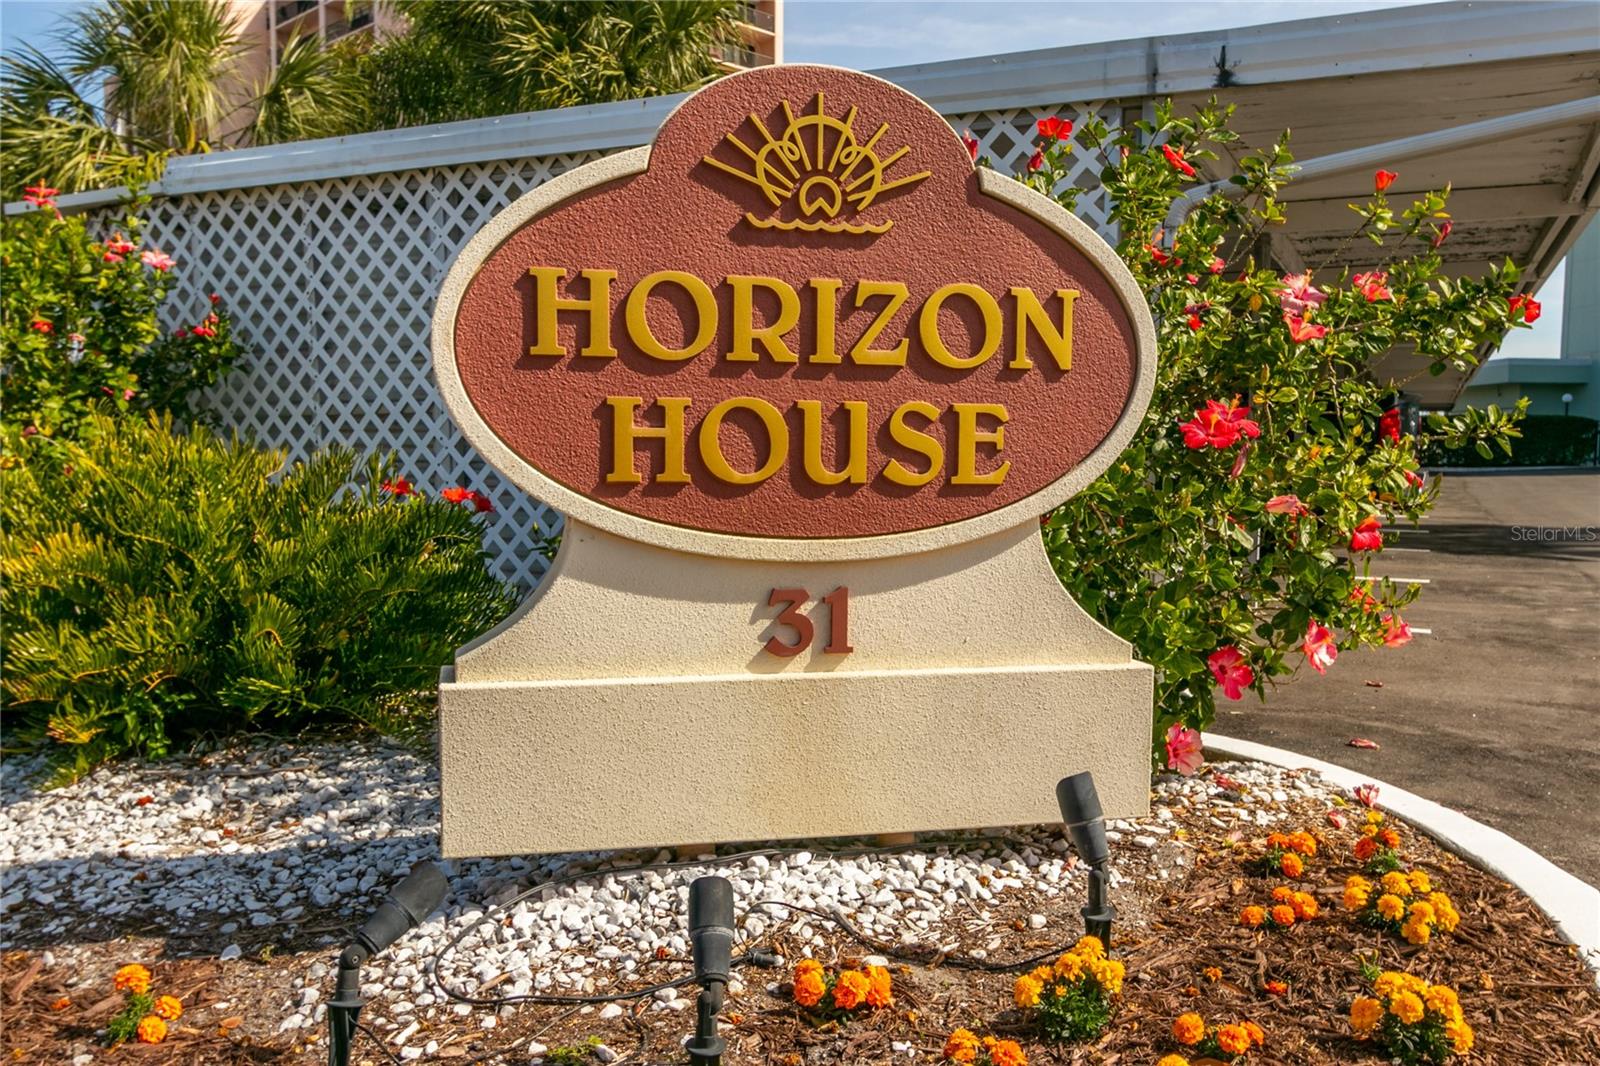 HORIZON HOUSE